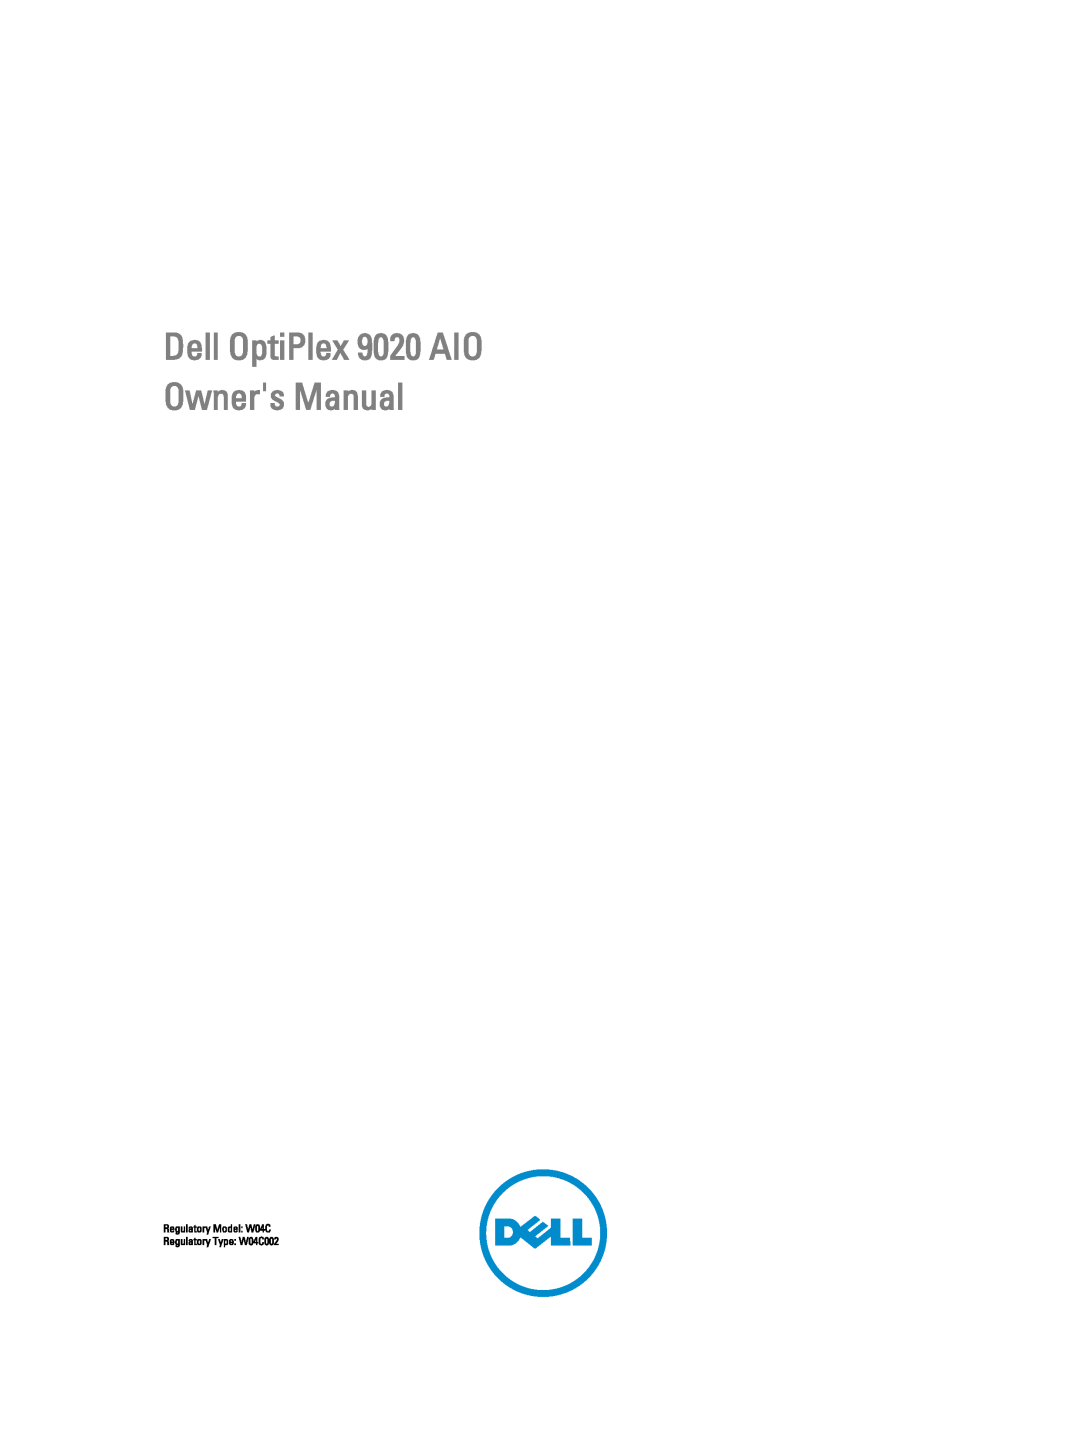 Dell owner manual Regulatory Model W04C Regulatory Type W04C002 